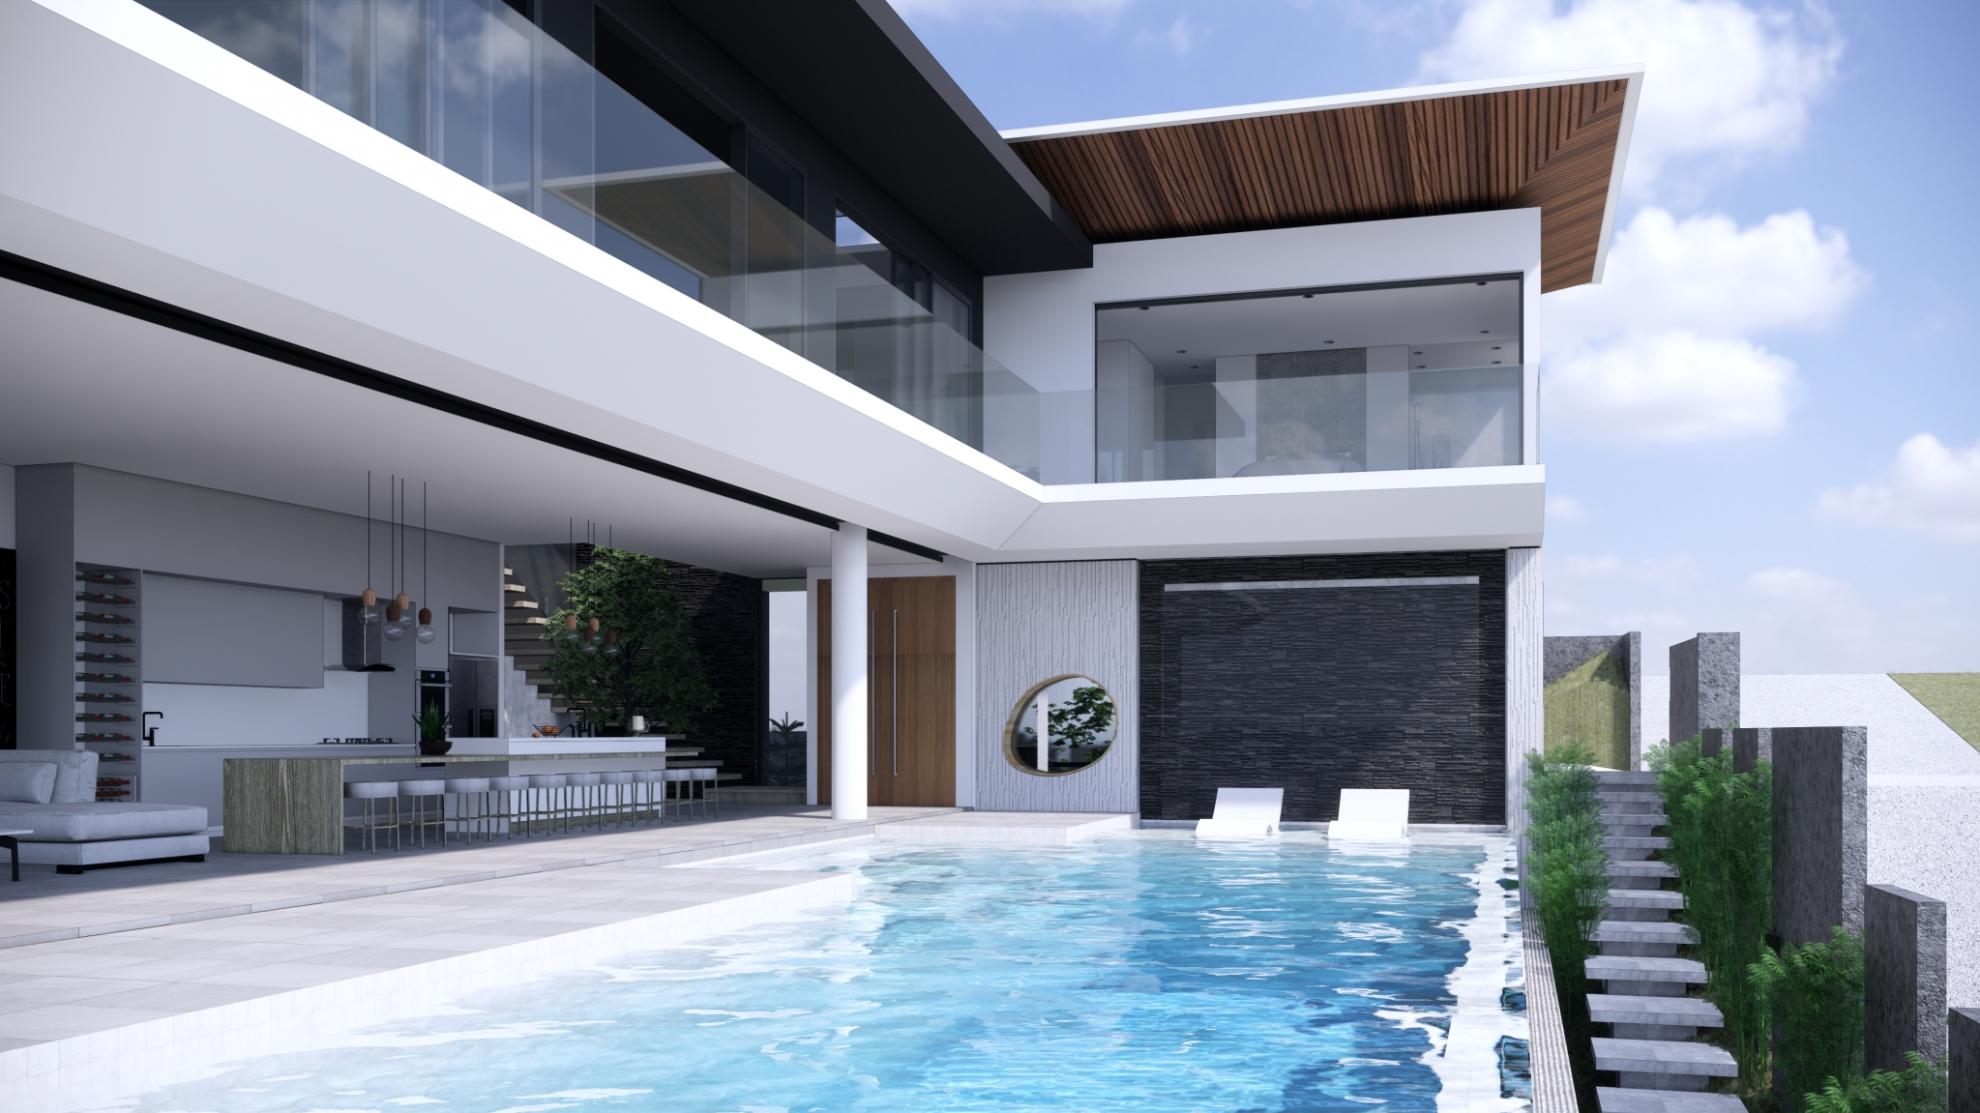 Naya 3 modern villa with swimming pool